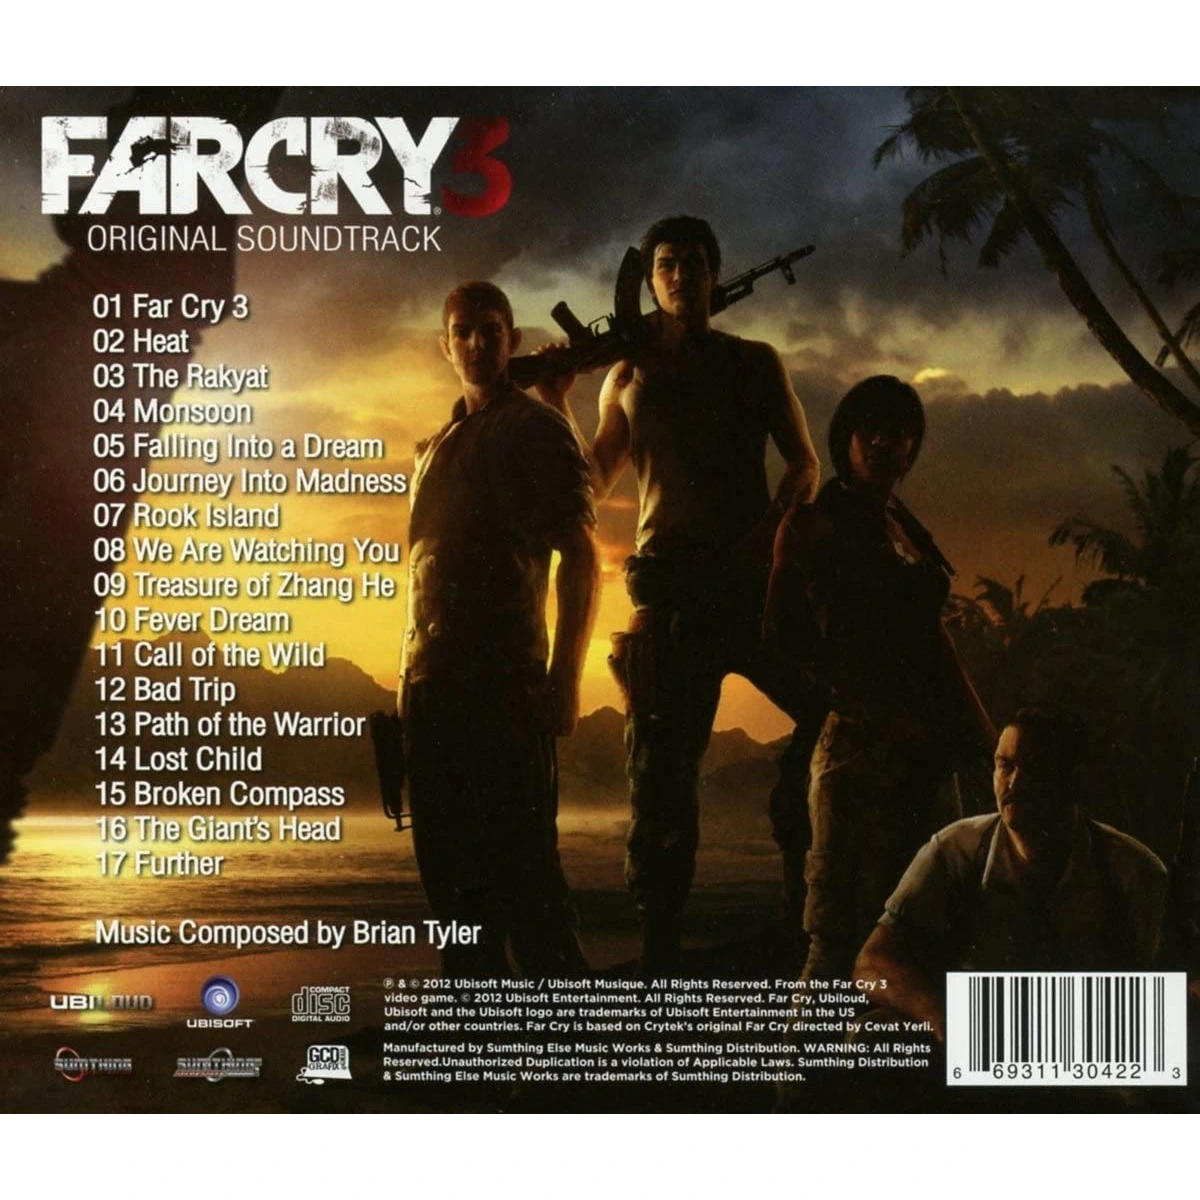 Further ost. Far Cry 3 OST. Far Cry 3 (2012). Brian Tyler far Cry 3. Far Cry 3 Original Soundtrack.